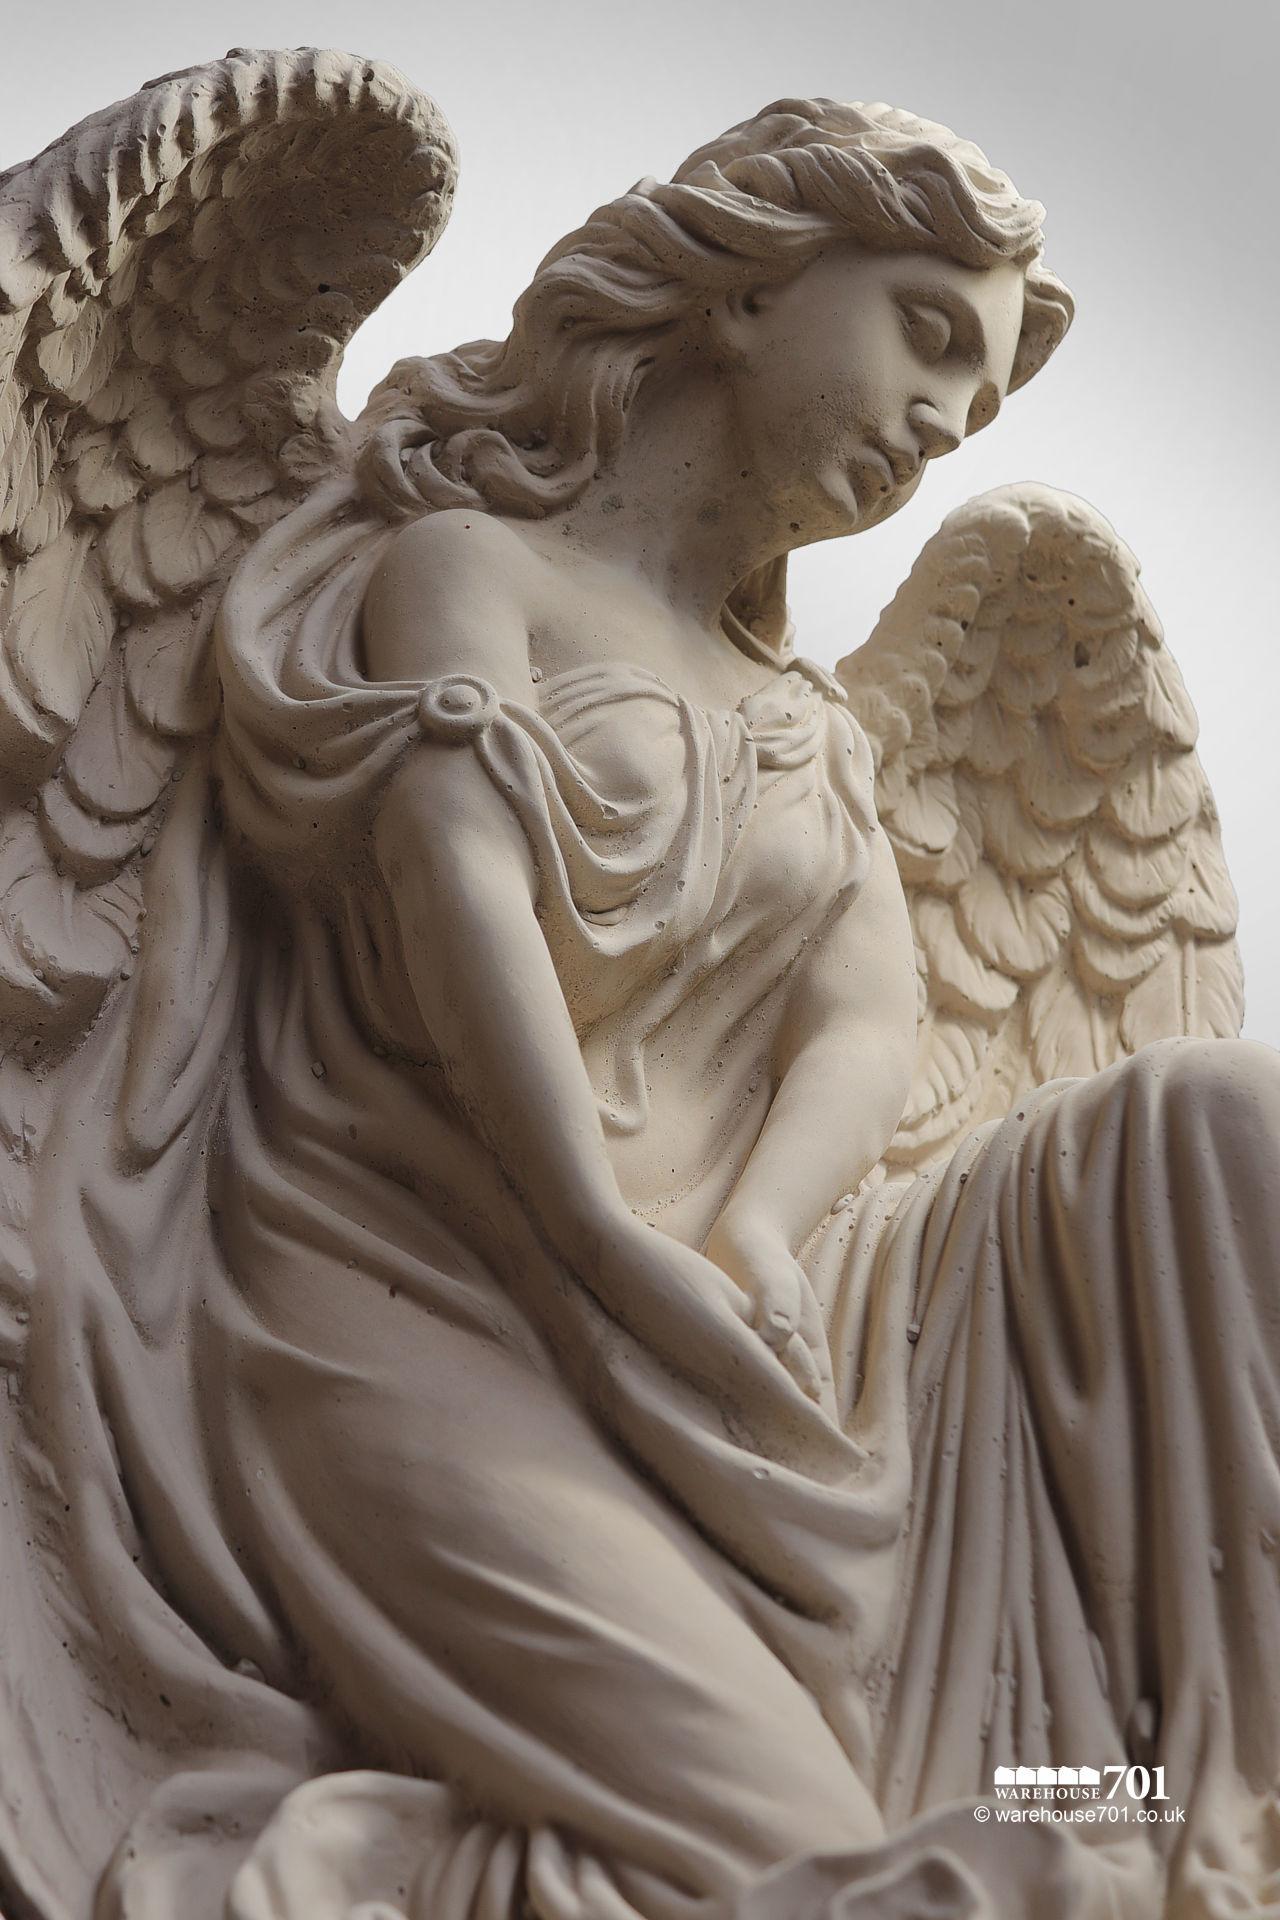 New Cast Stone Kneeling Angel Garden Statue or Figure #3